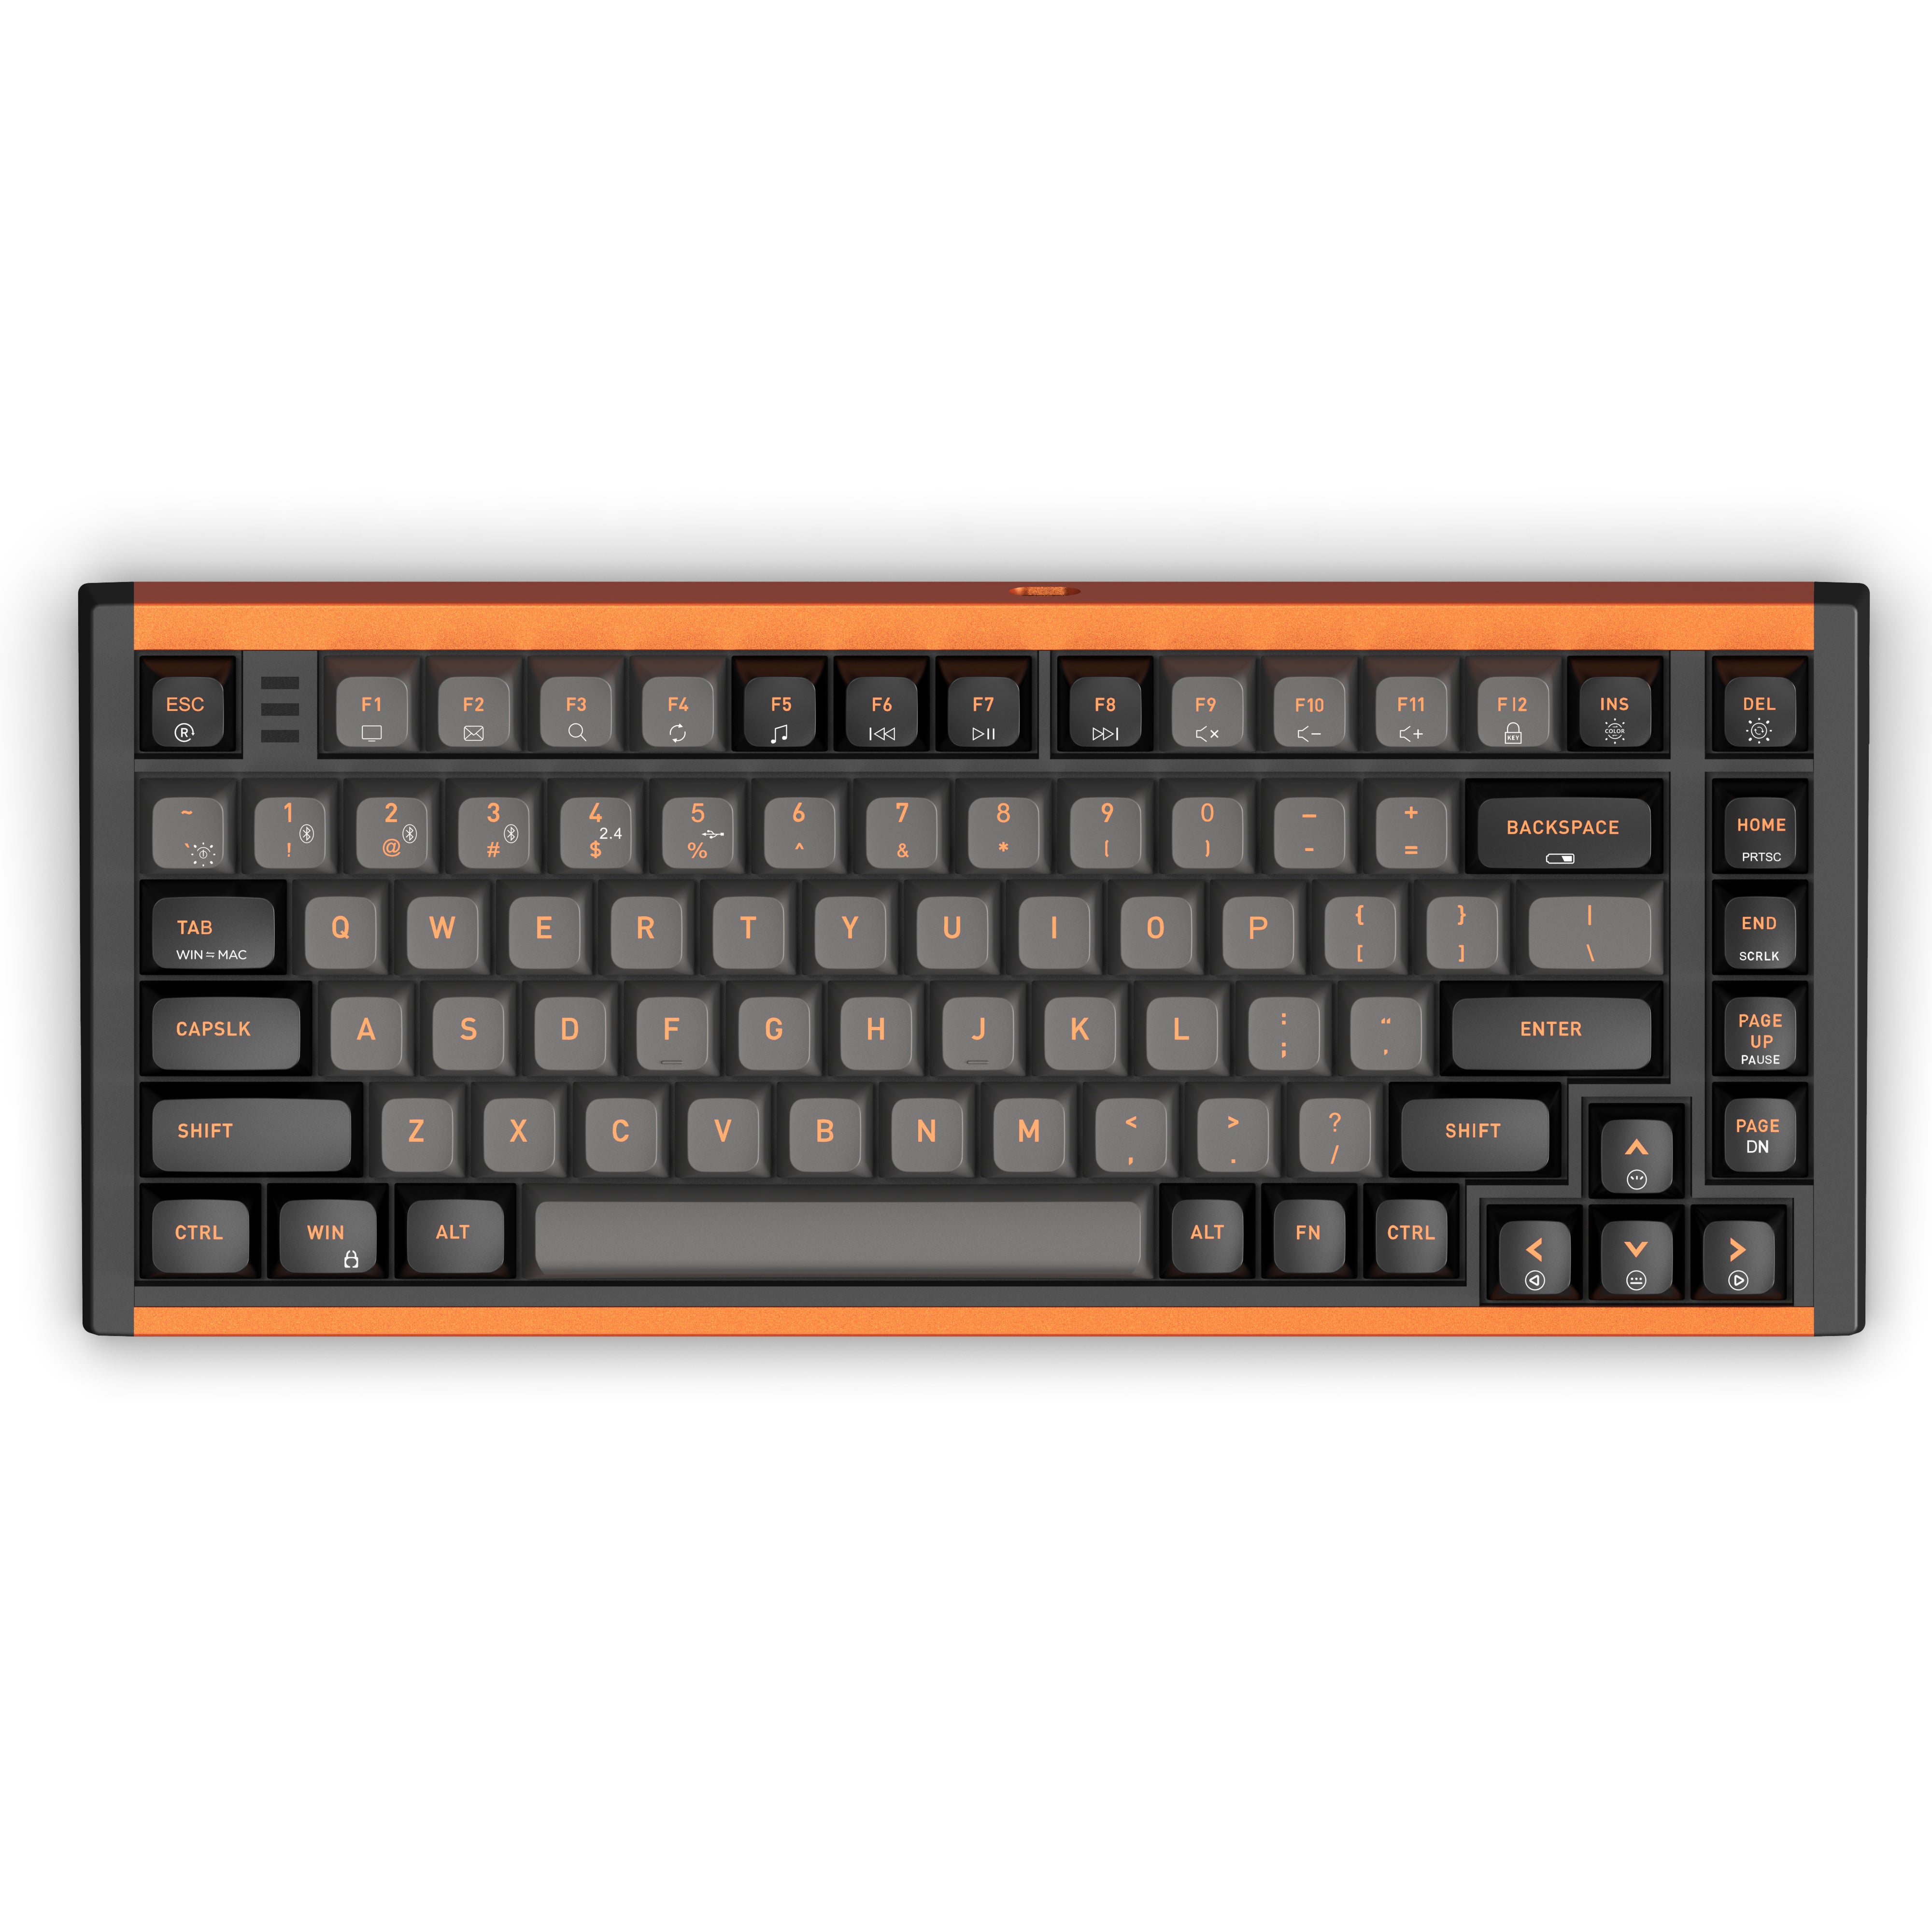 MKB i83 Keyboard